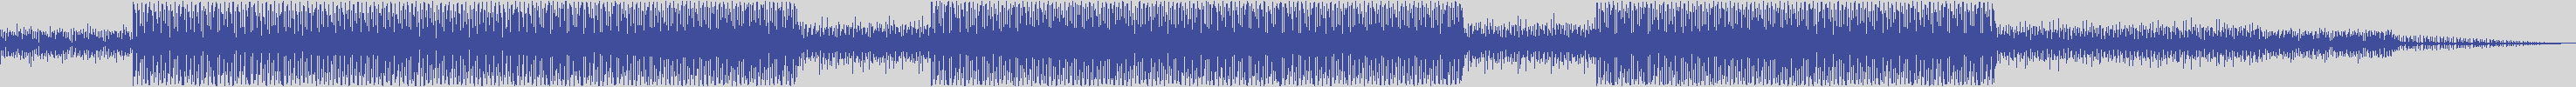 nf_boyz_records [NFY057] Simple Beat - Your Sport [Original Mix] audio wave form